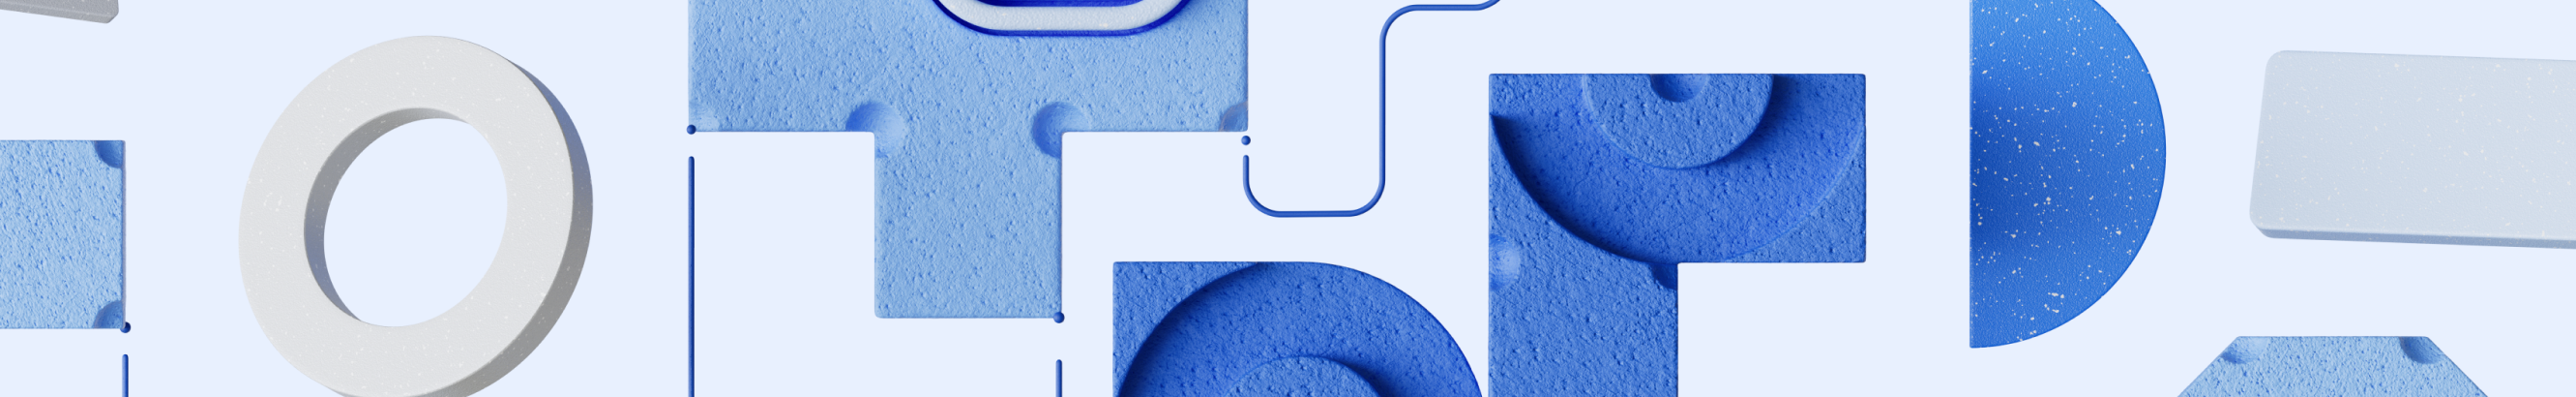 Banner de perfil de DeepMind Design